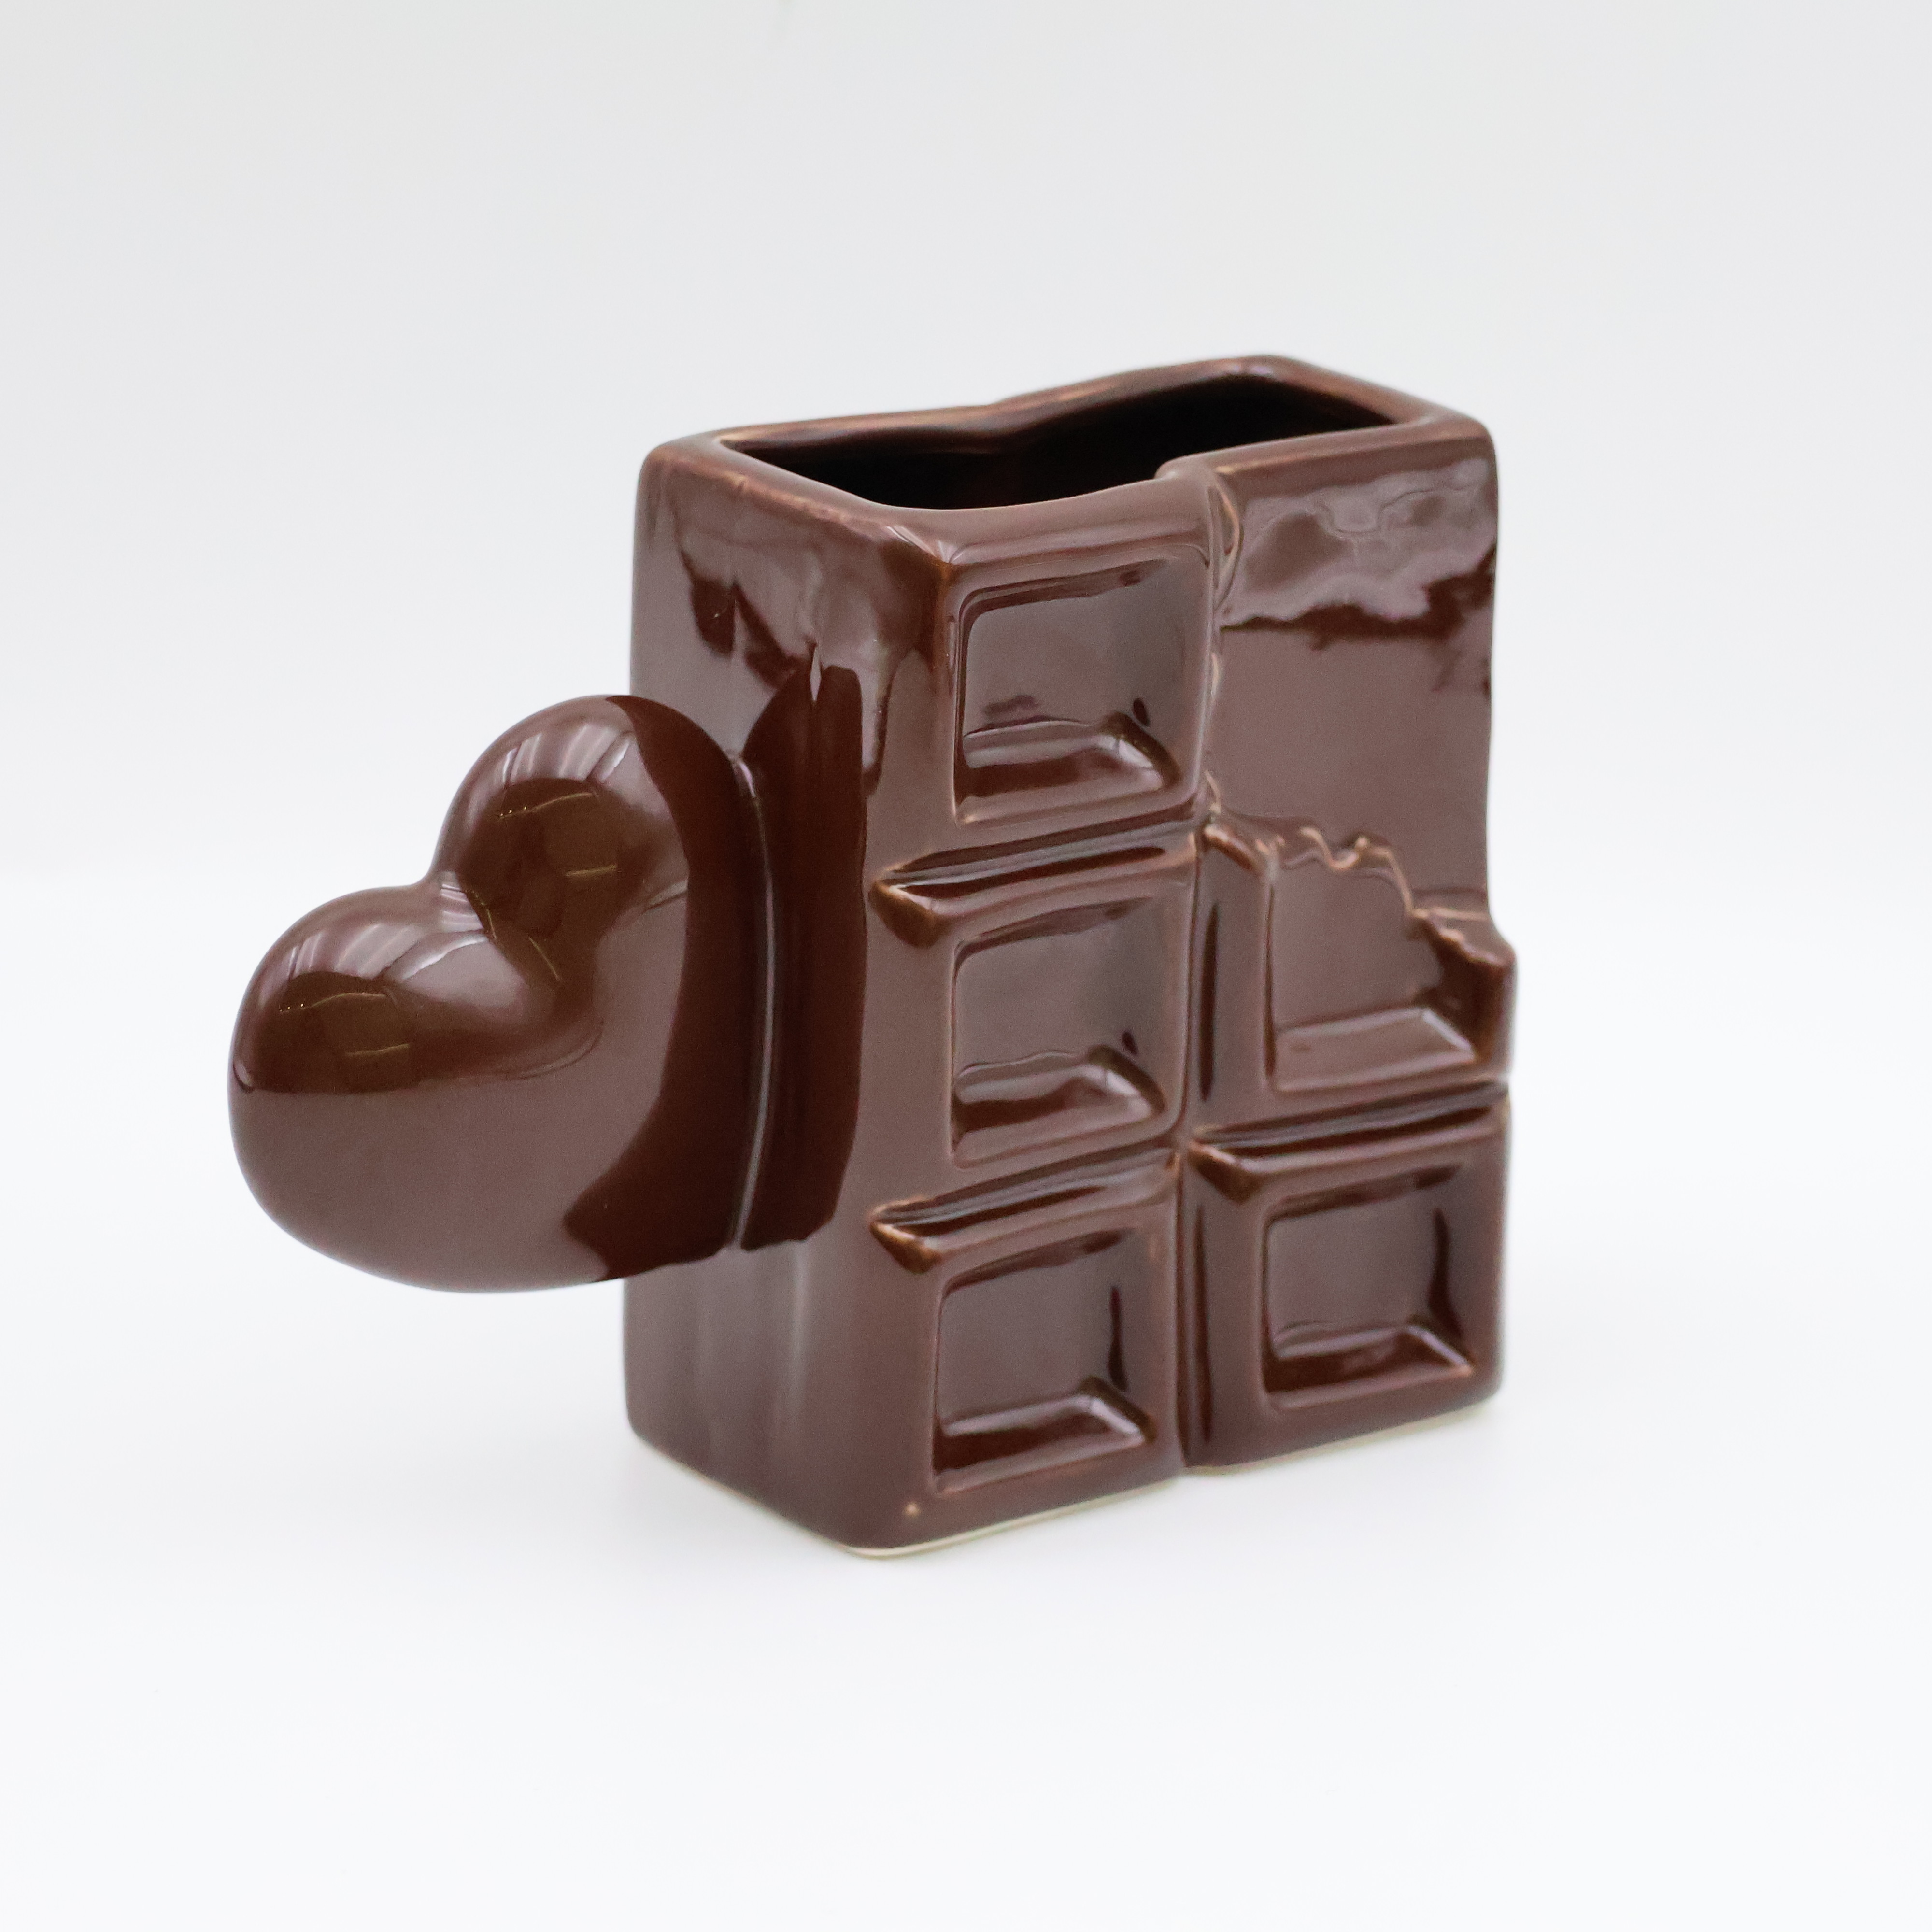 Ceramic Chocolate Mug ine Heart Handle